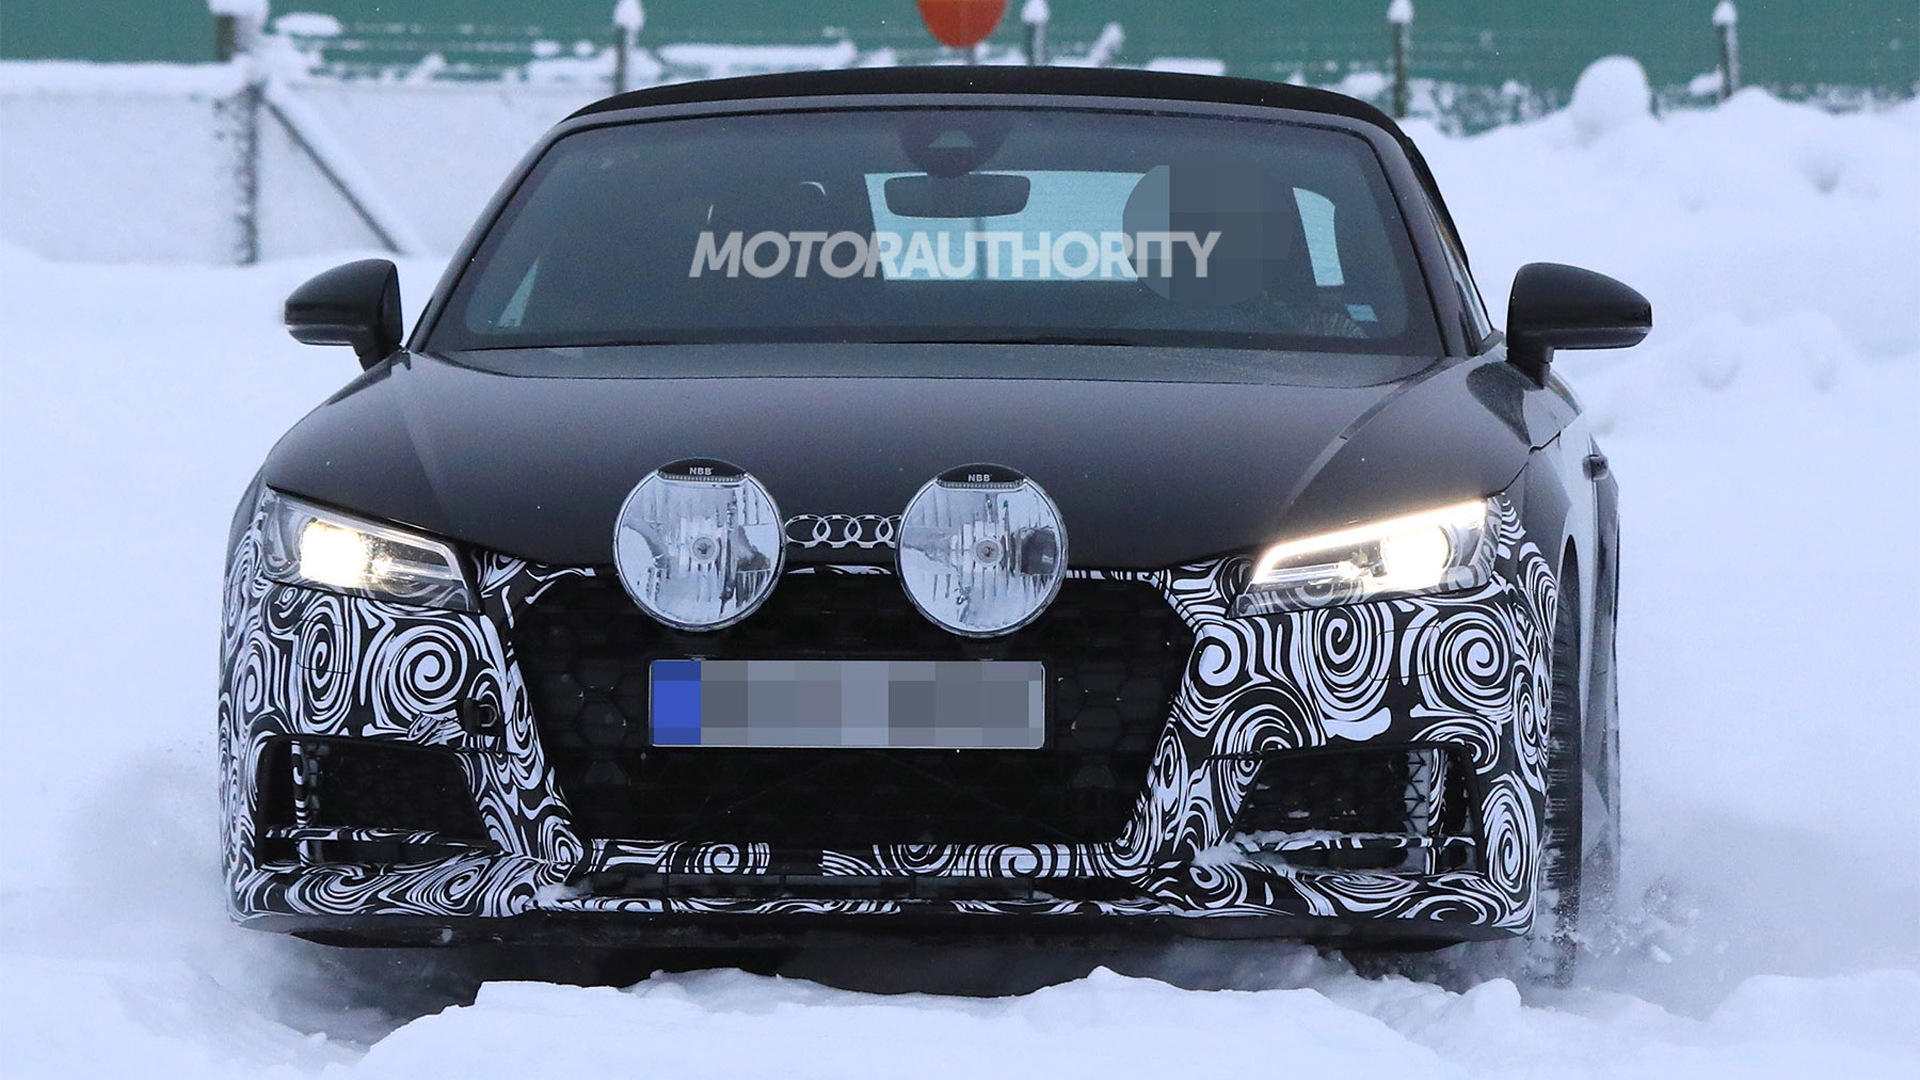 2020 Audi TT Roadster facelift spy shots - Image via S. Baldauf/SB-Medien